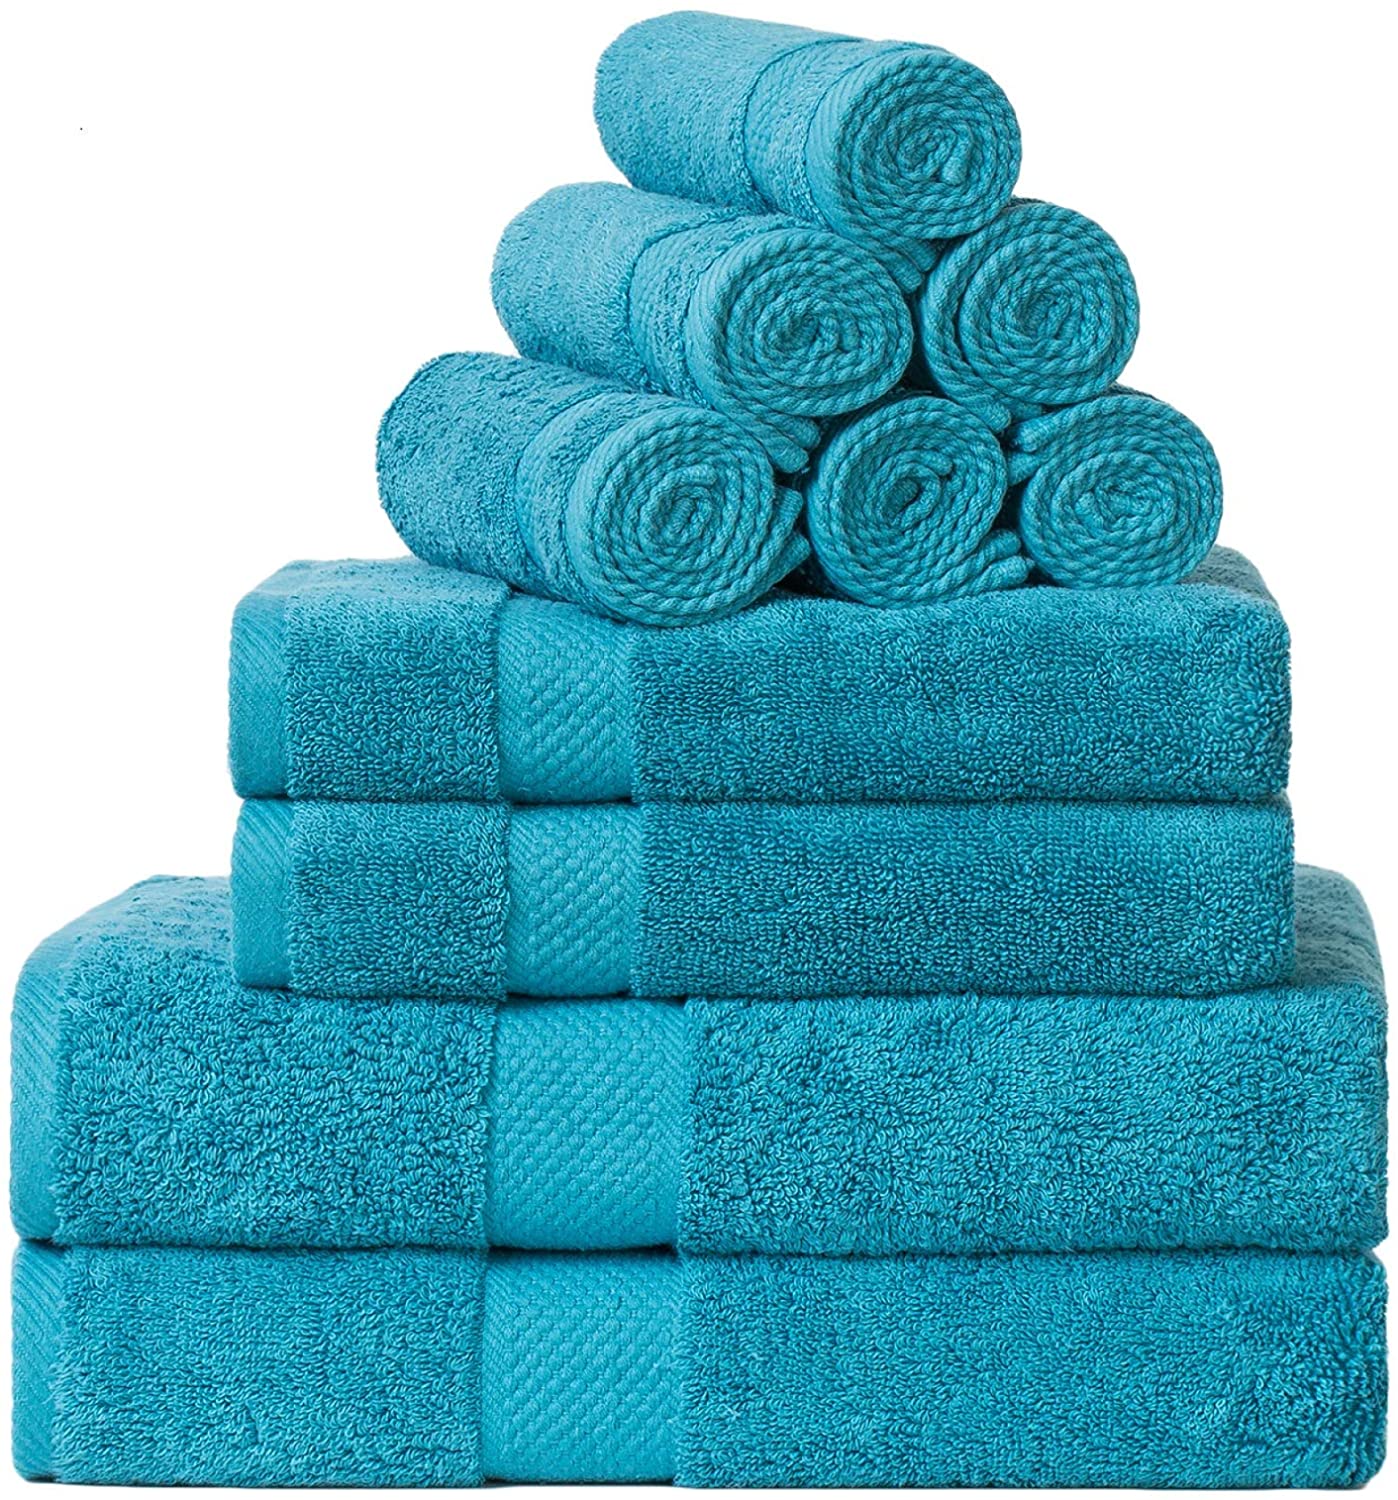 Bedsure Bath Towel Sets, 650GSM Combed Cotton Towels Set for Bathroom - 10 Pack, 2 Bath Towels 27x54, 2 Hand Towels 16x30, 6 Wash Cloths 13x13, Absorbent & Soft - Teal